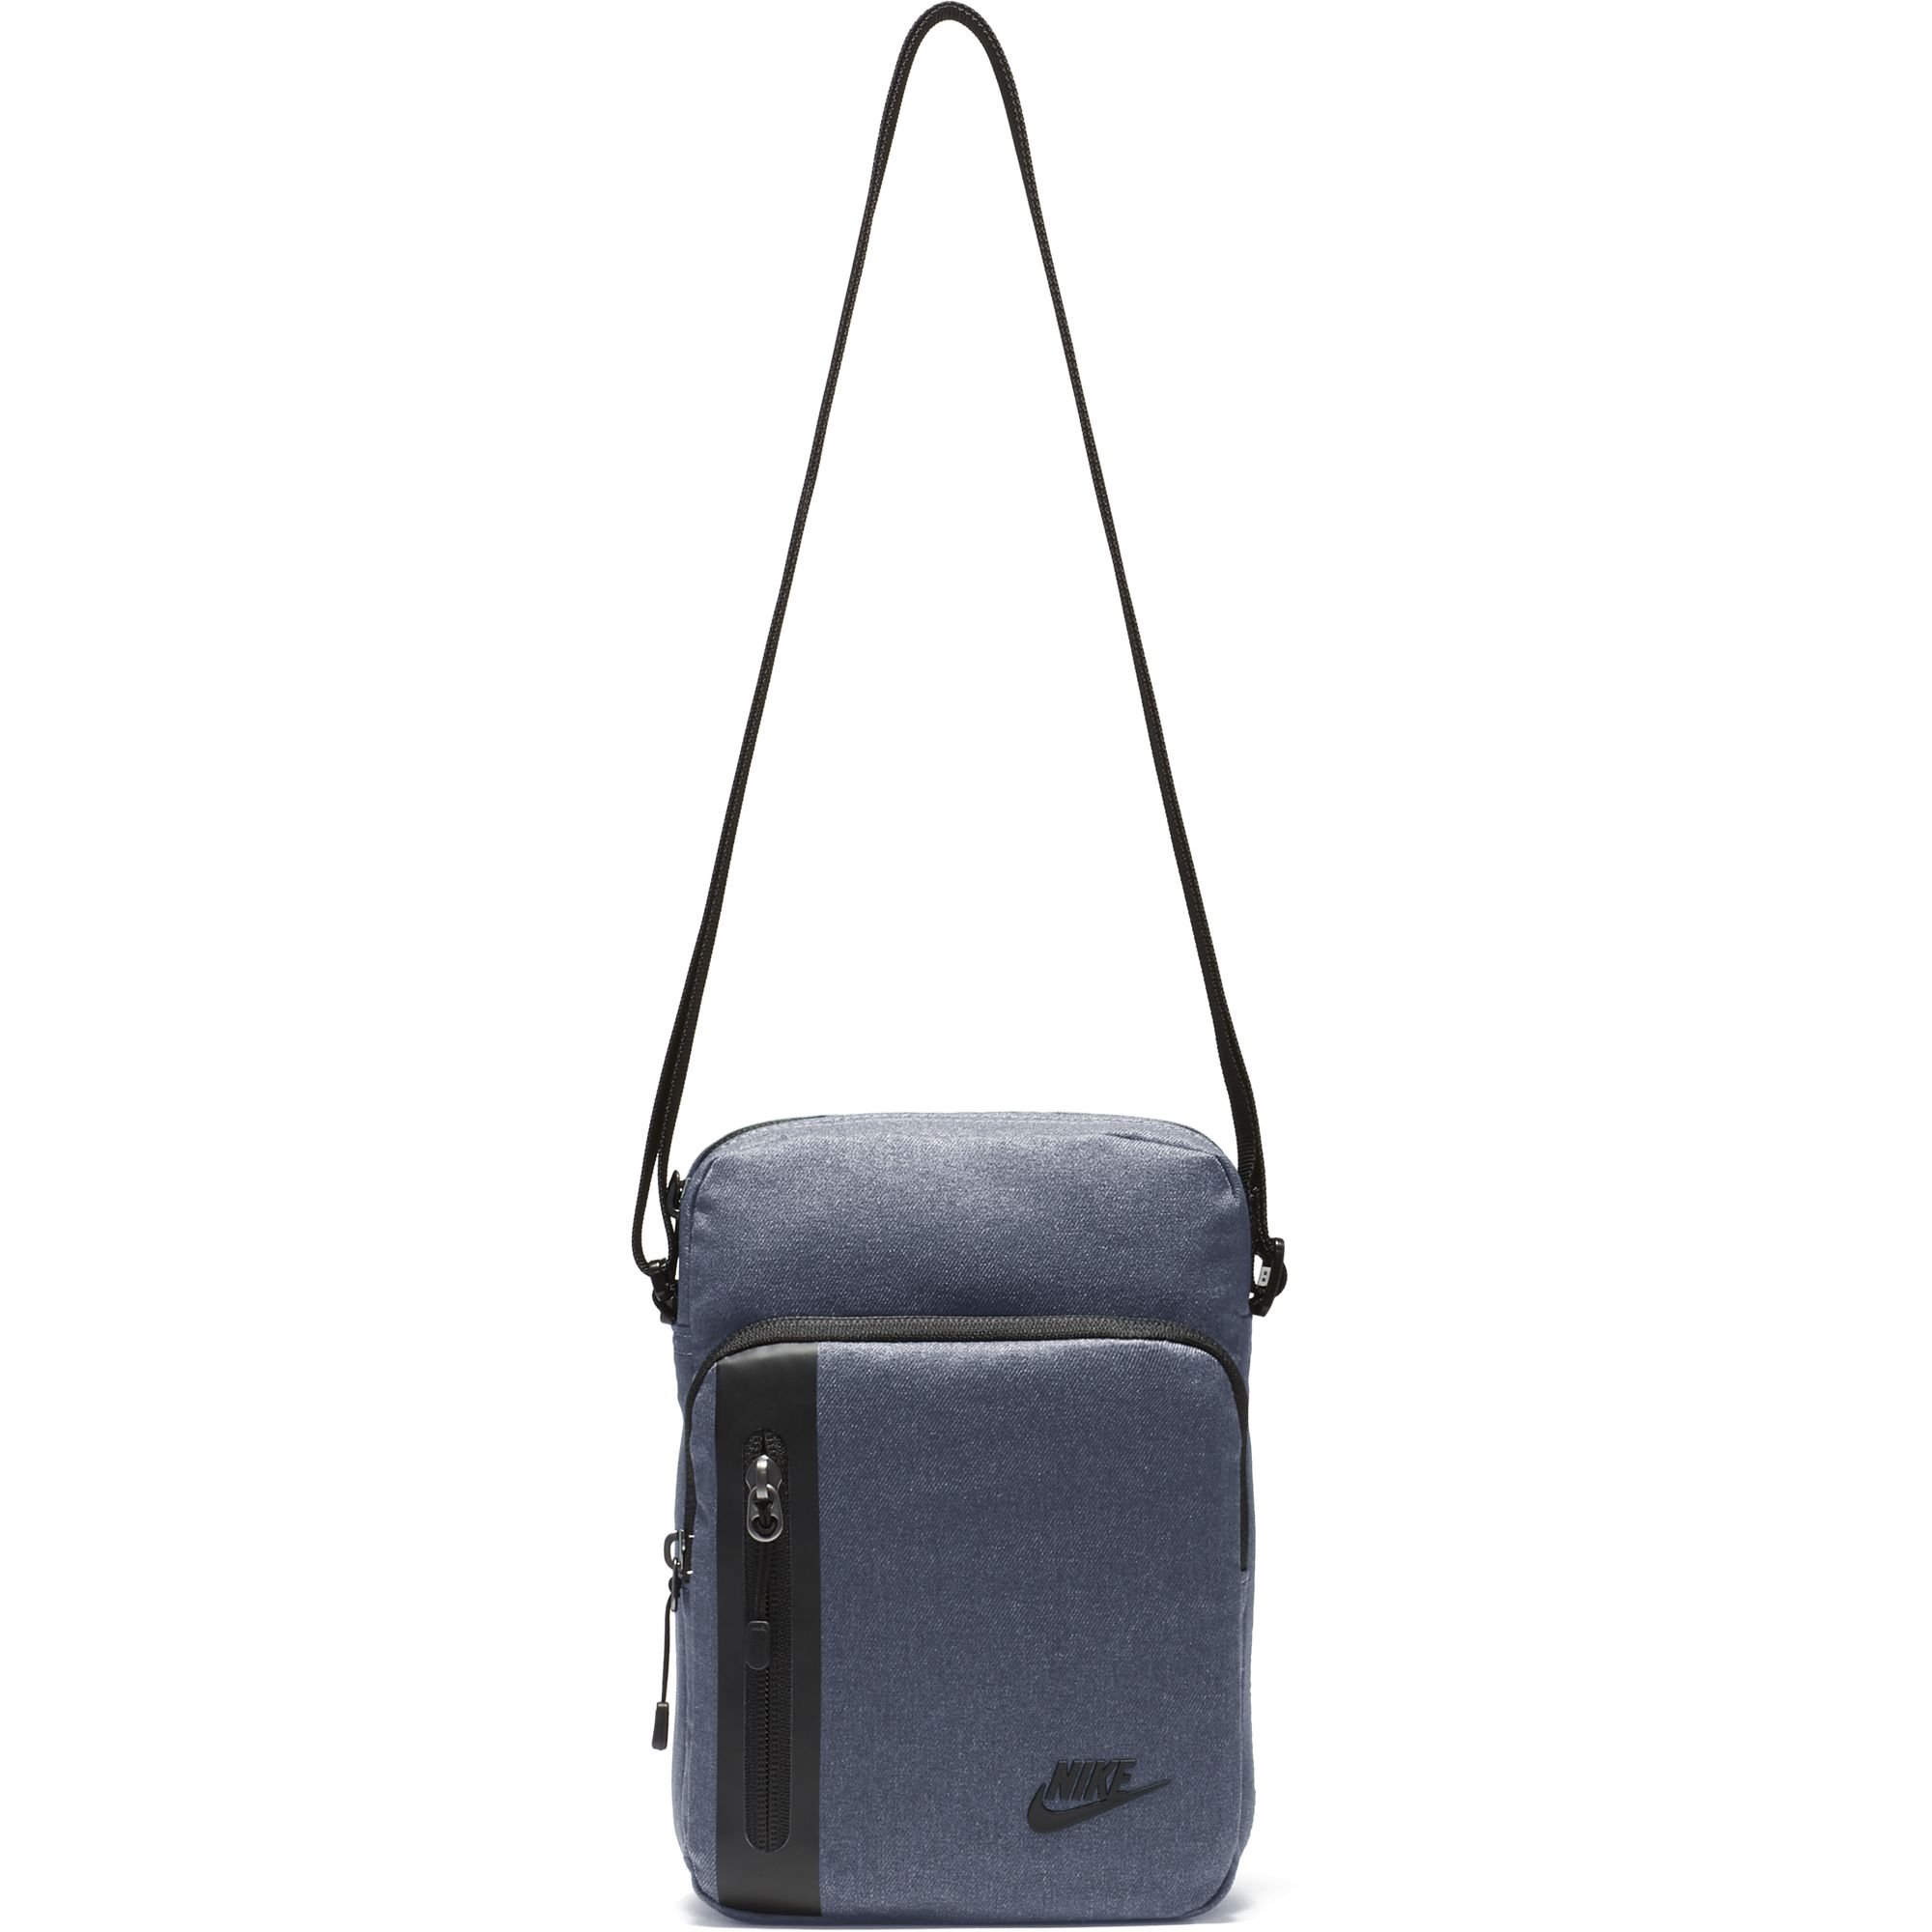 Nike Core Tech Messenger Shoulder Small Mini Crossbody Bag Organizer Handbag | eBay